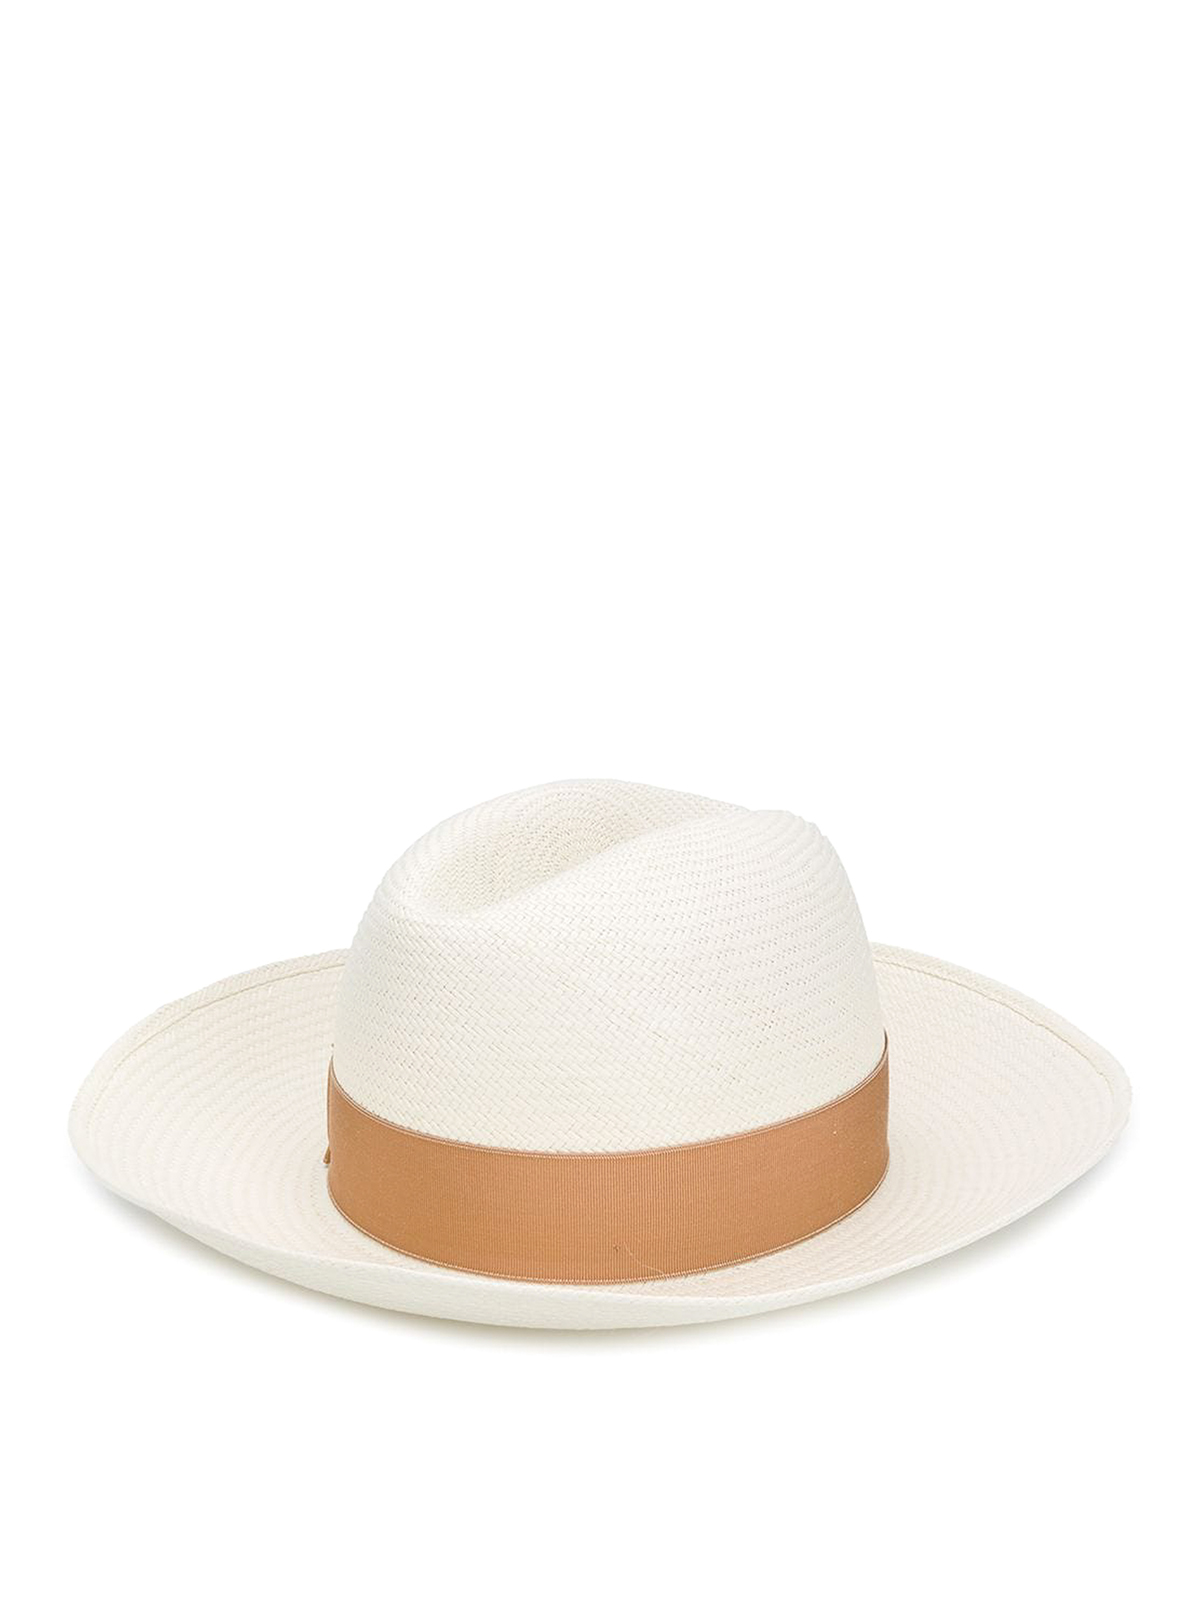 Borsalino Straw Sun Hat With Bow In Crema